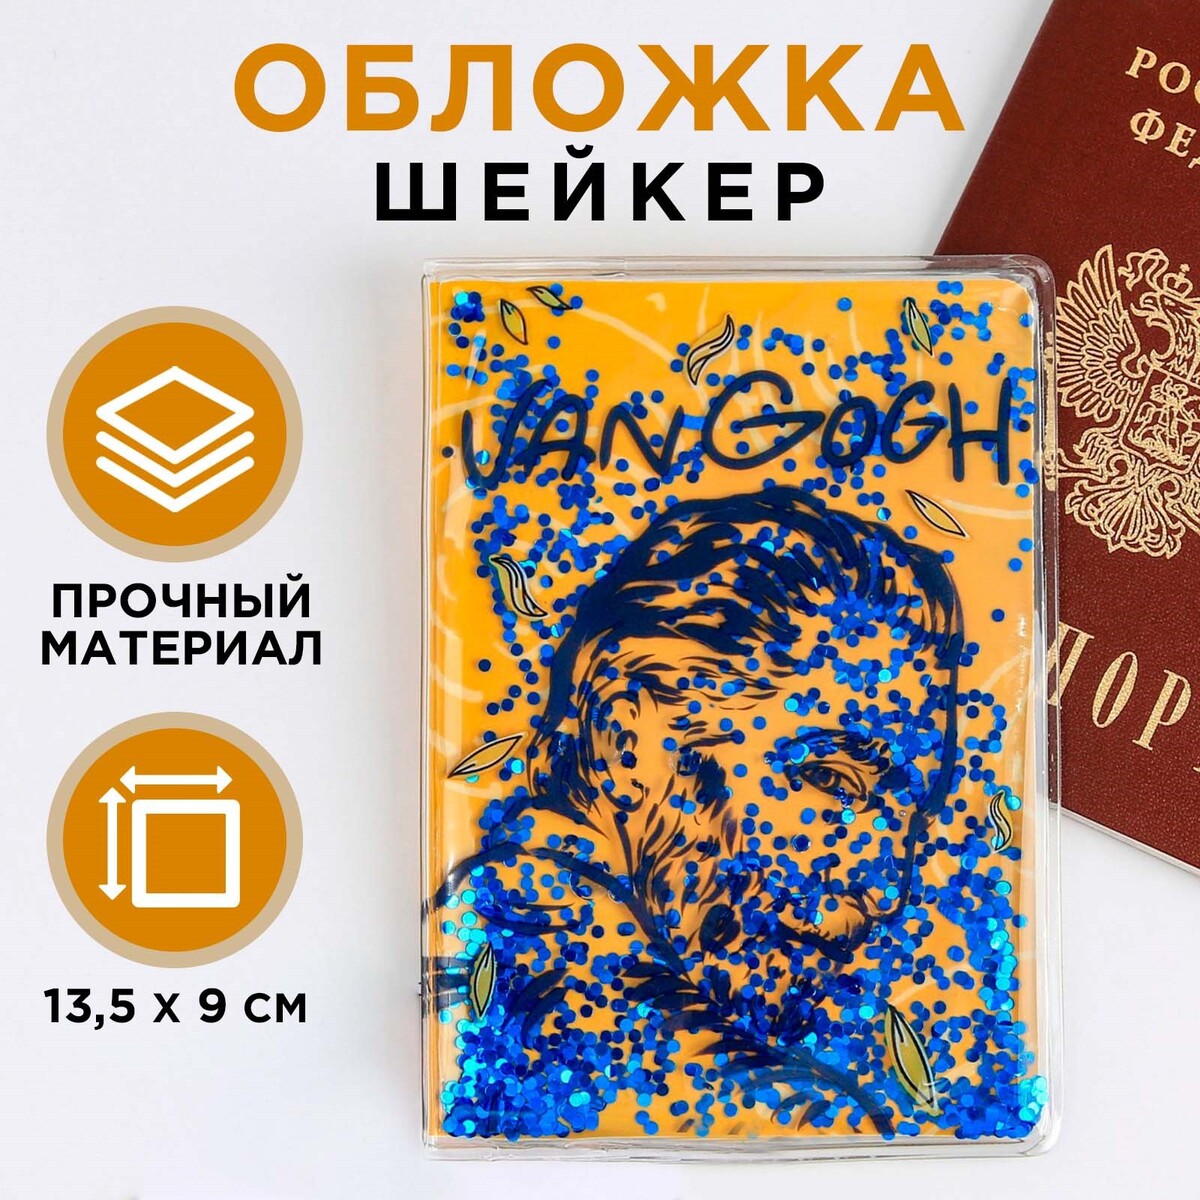 Обложка-шейкер для паспорта van gogh van gogh the complete paintings bibliotheca universalis